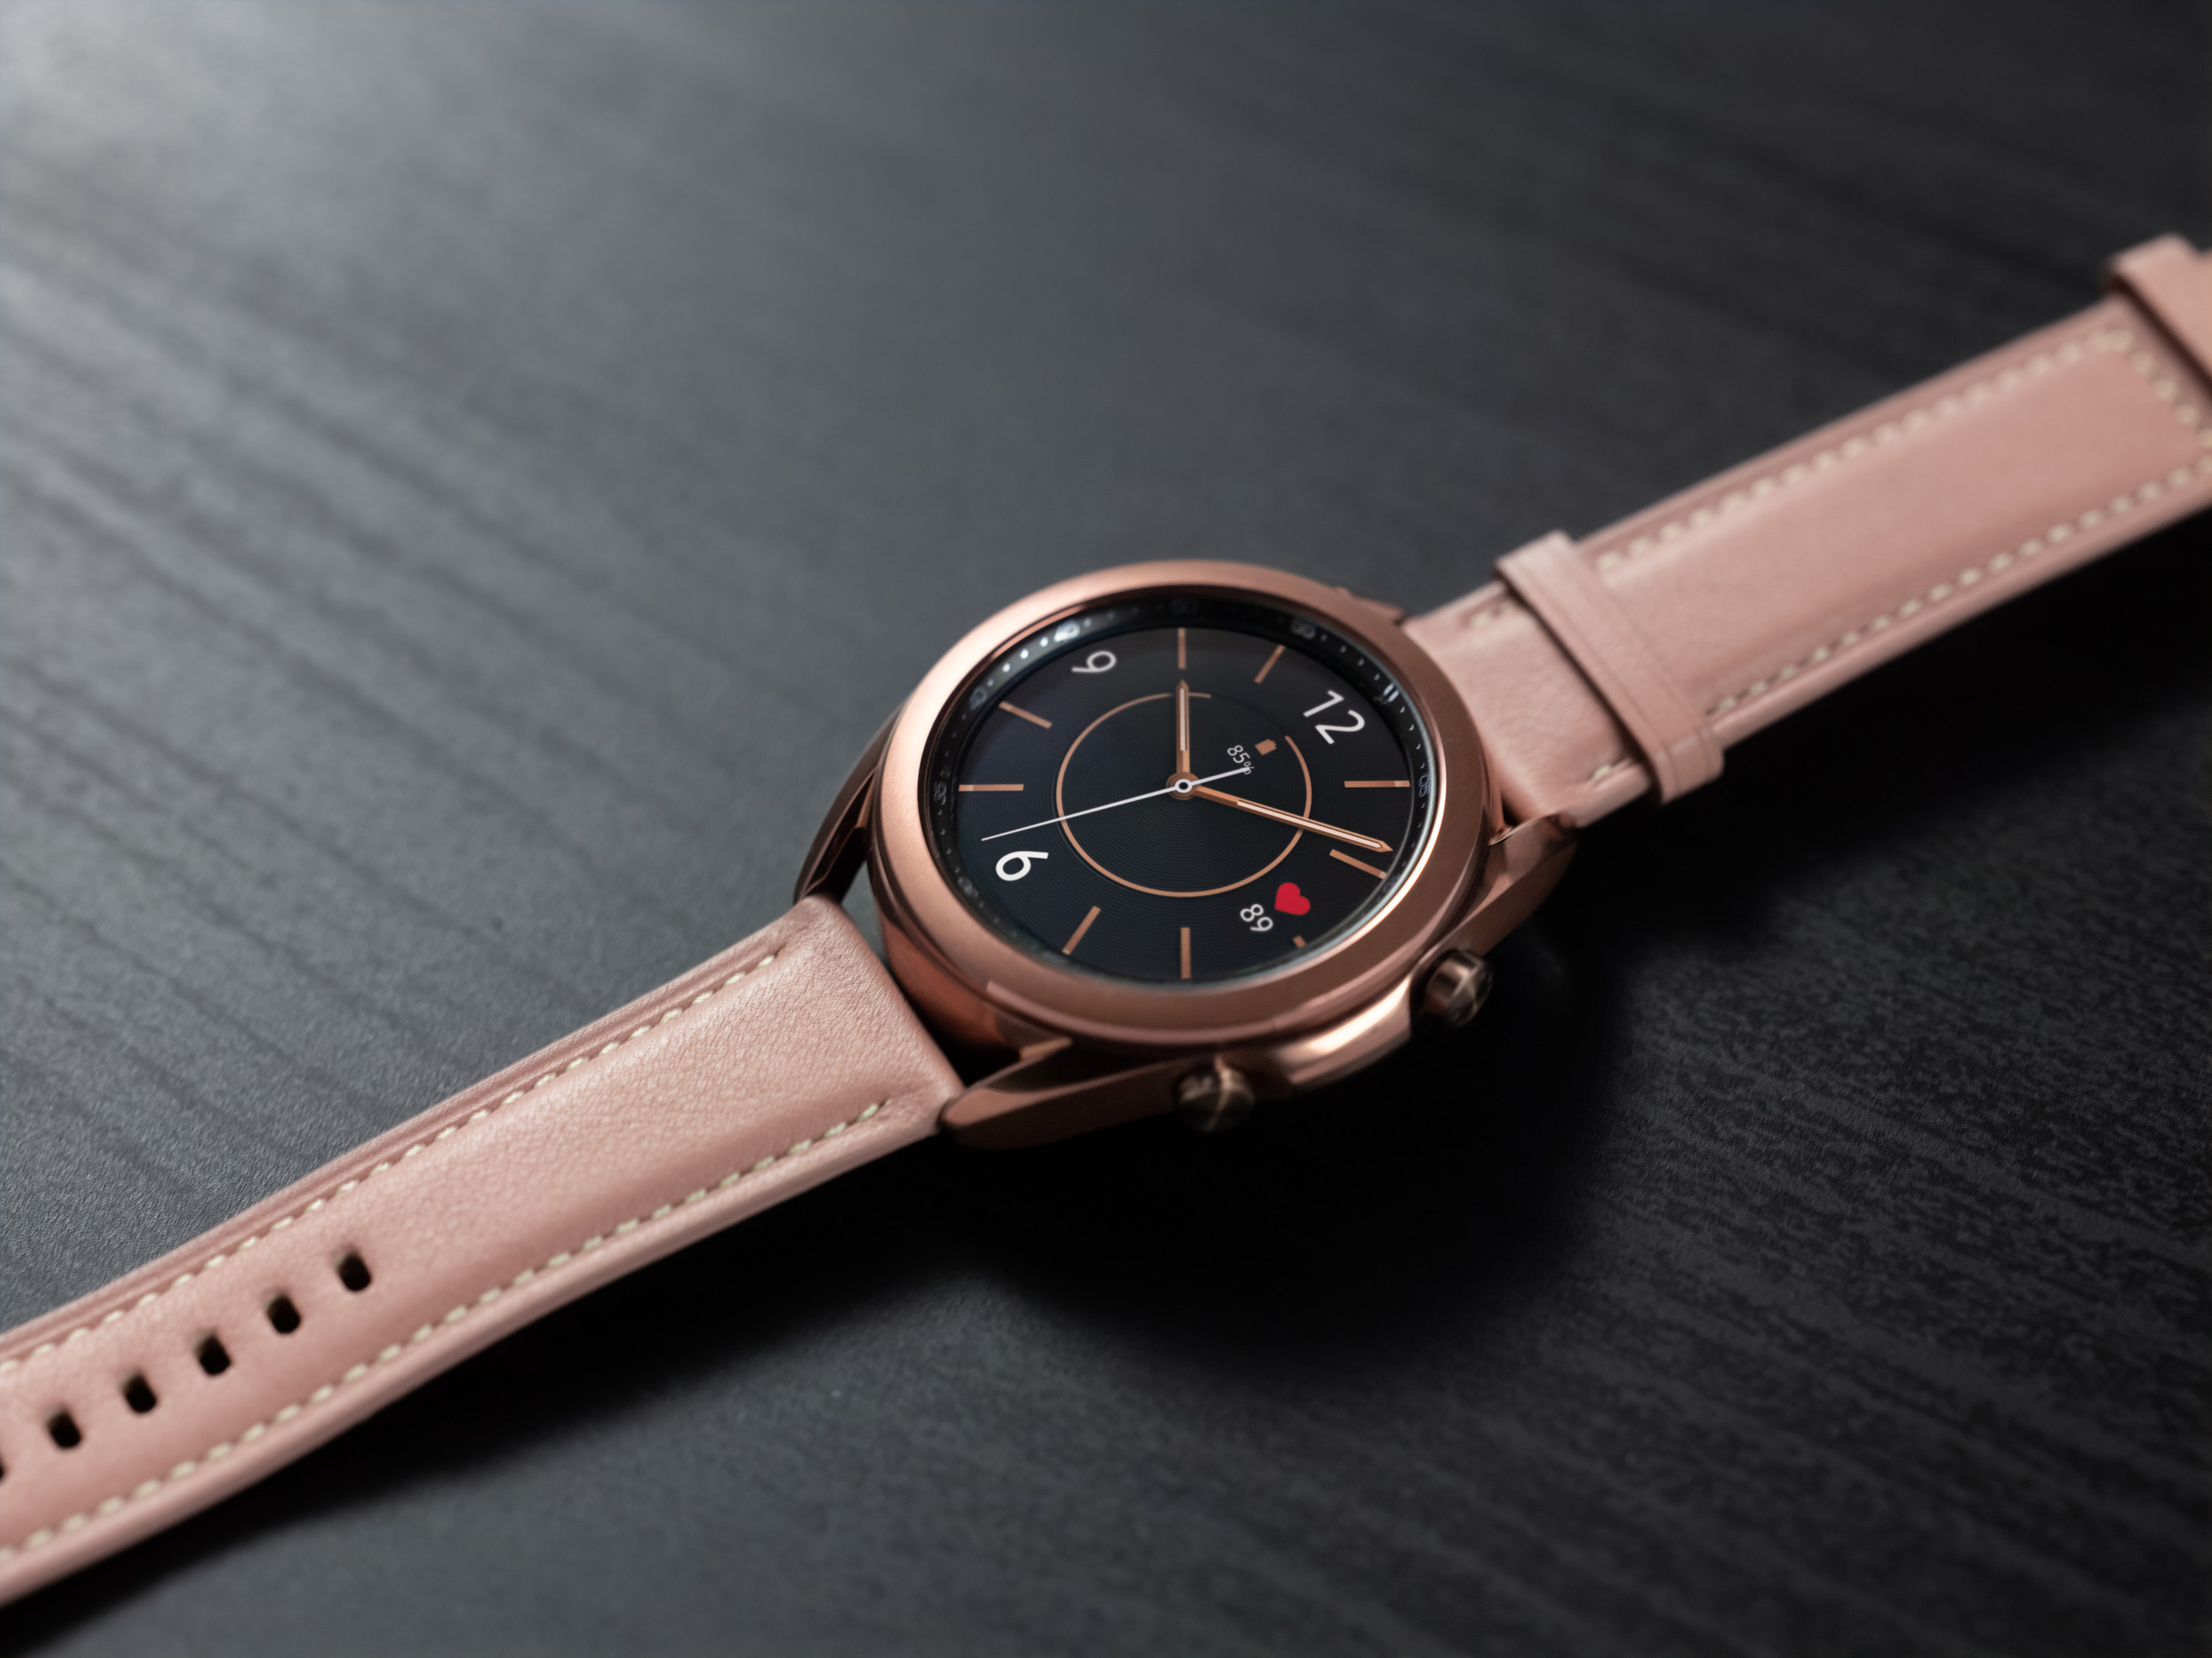 Samsung Galaxy Watch 3 debuts w/ $399 starting price - 9to5Google